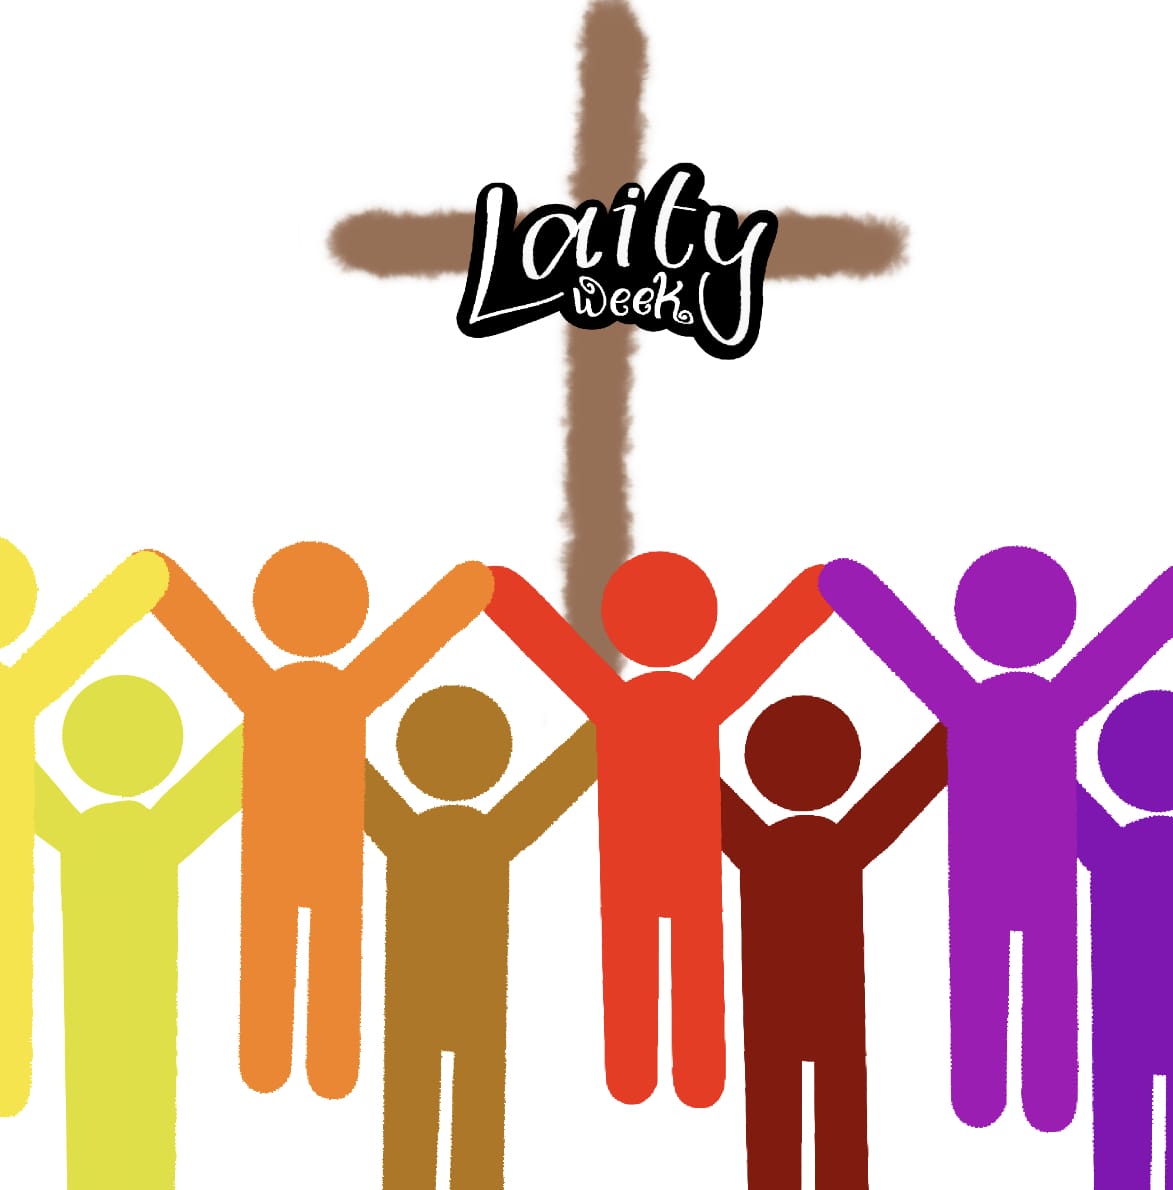 † Laity Week Holy Communion Service